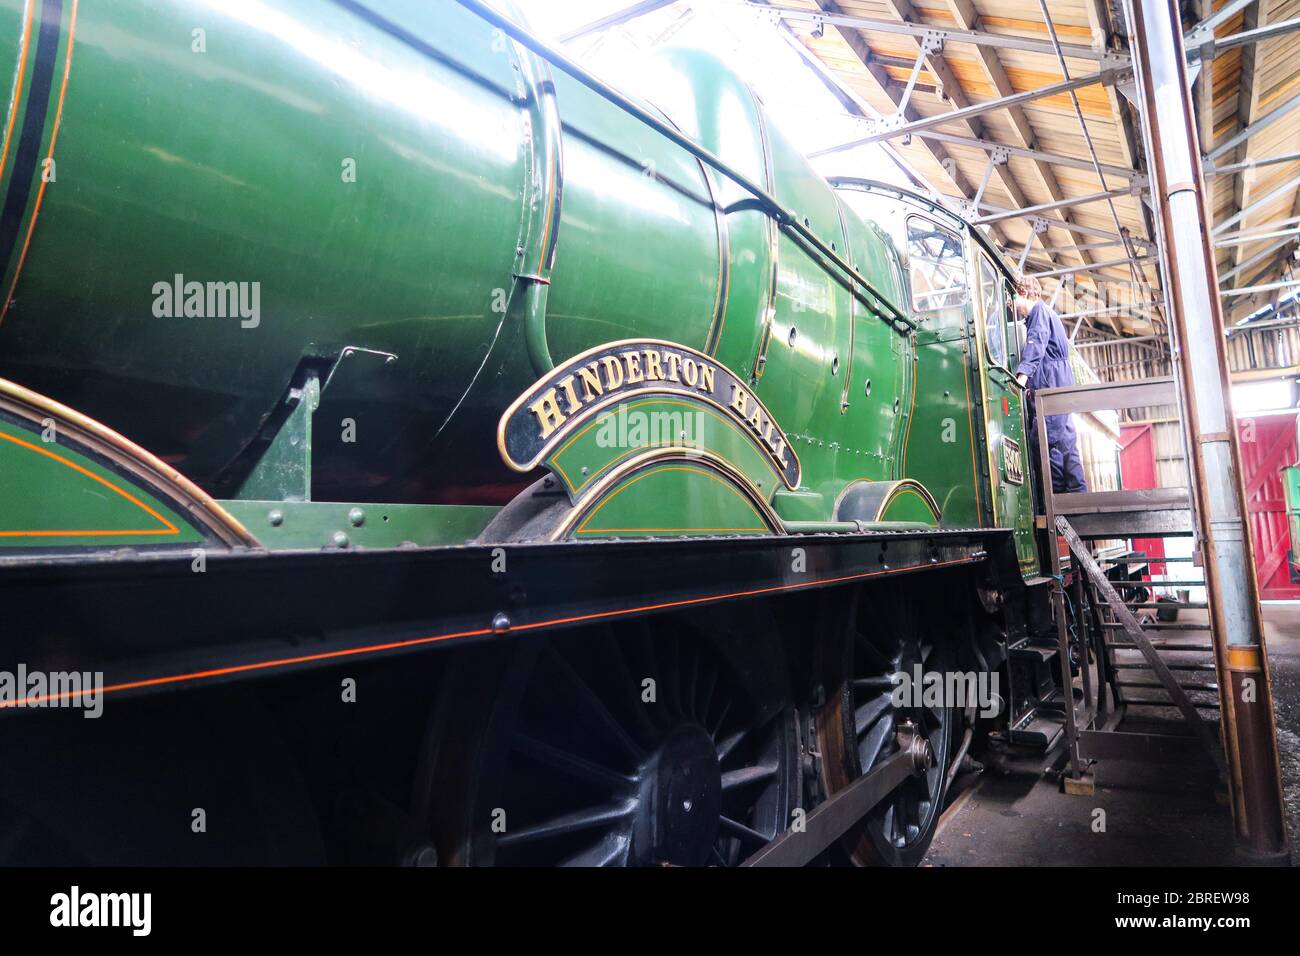 Hinderton Hall Locomotive at Didcot Railway Centre. Stock Photo